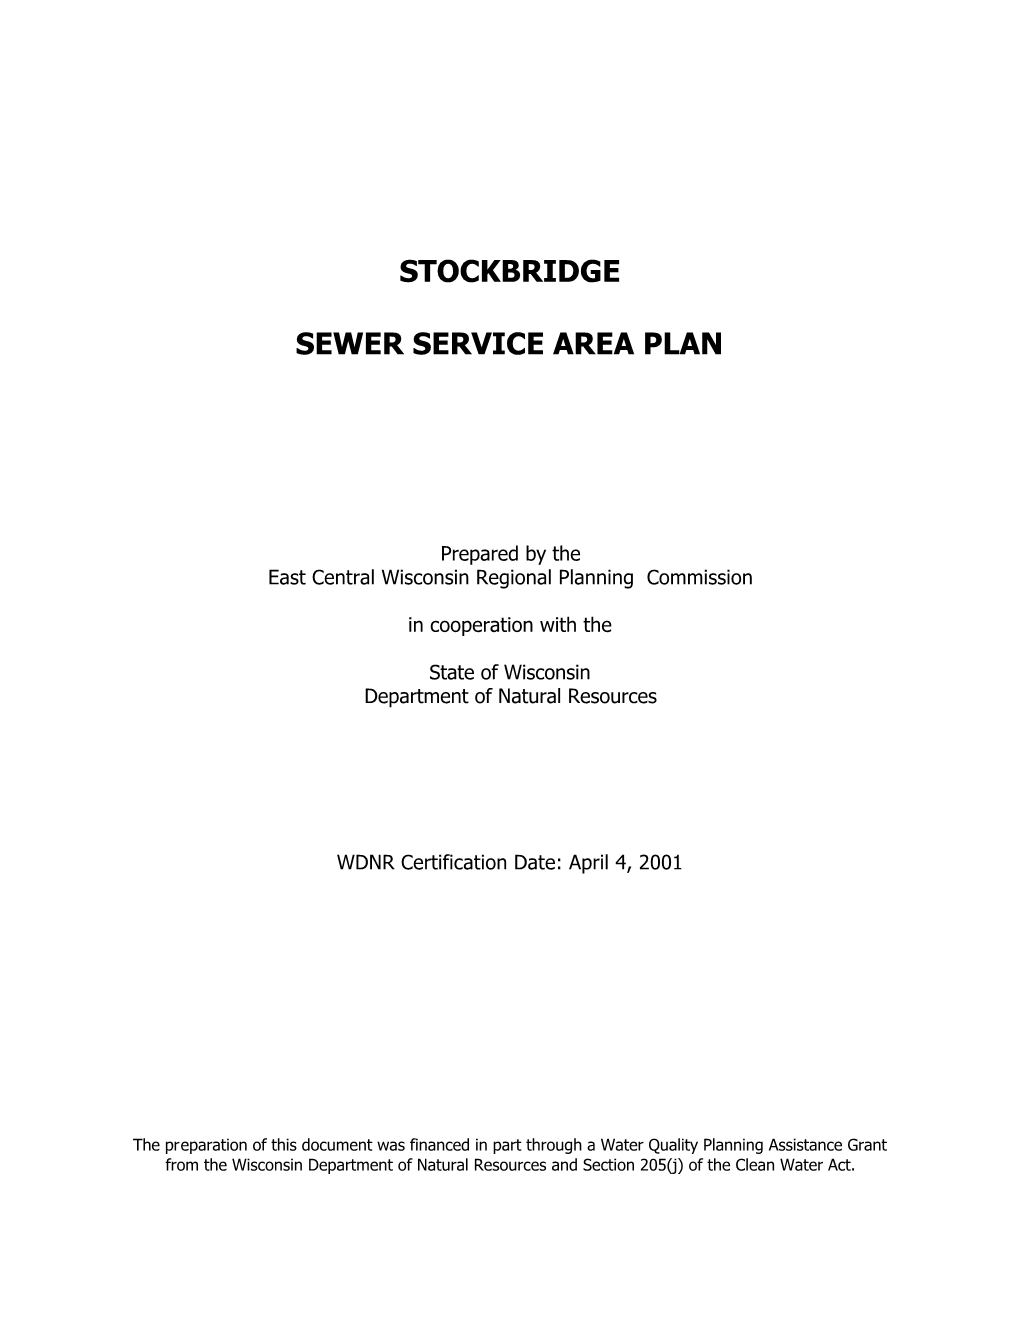 Stockbridge Sewer Service Area Plan Update